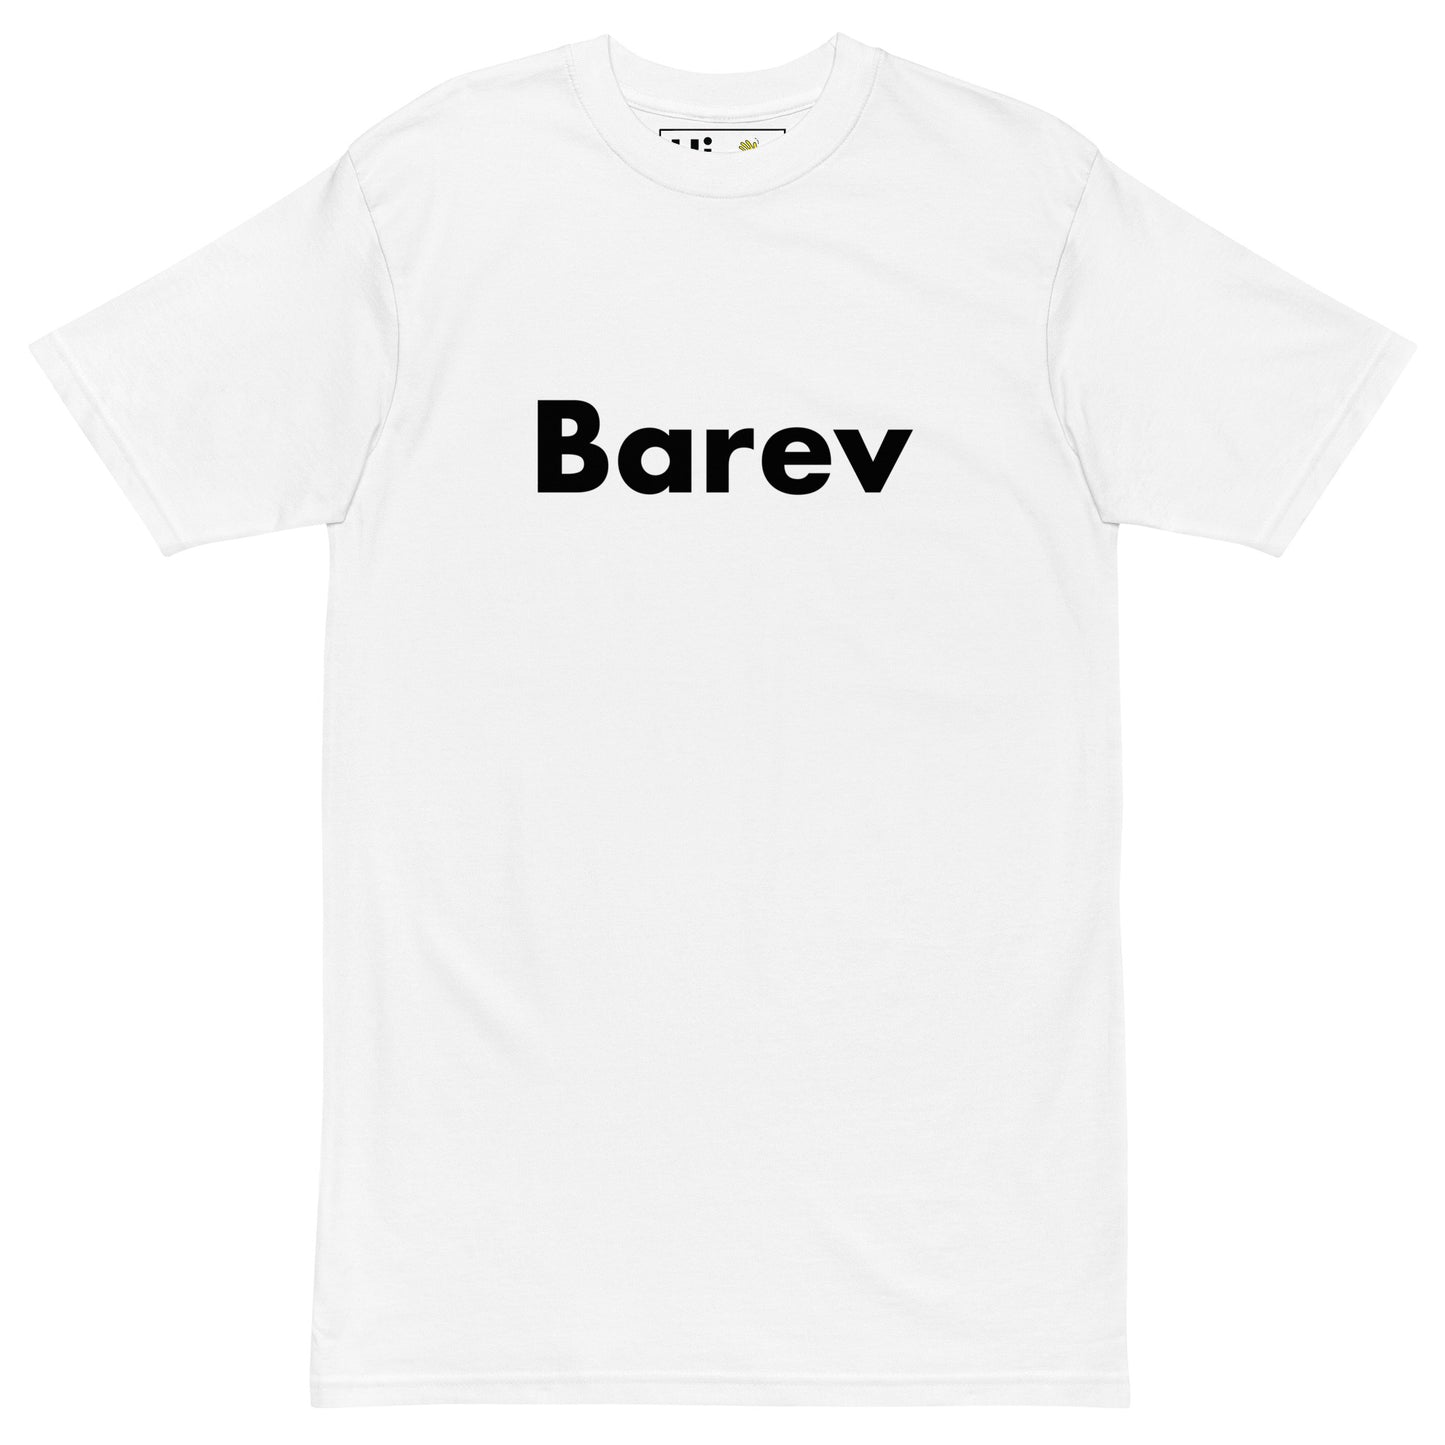 Hi Barev Armenian